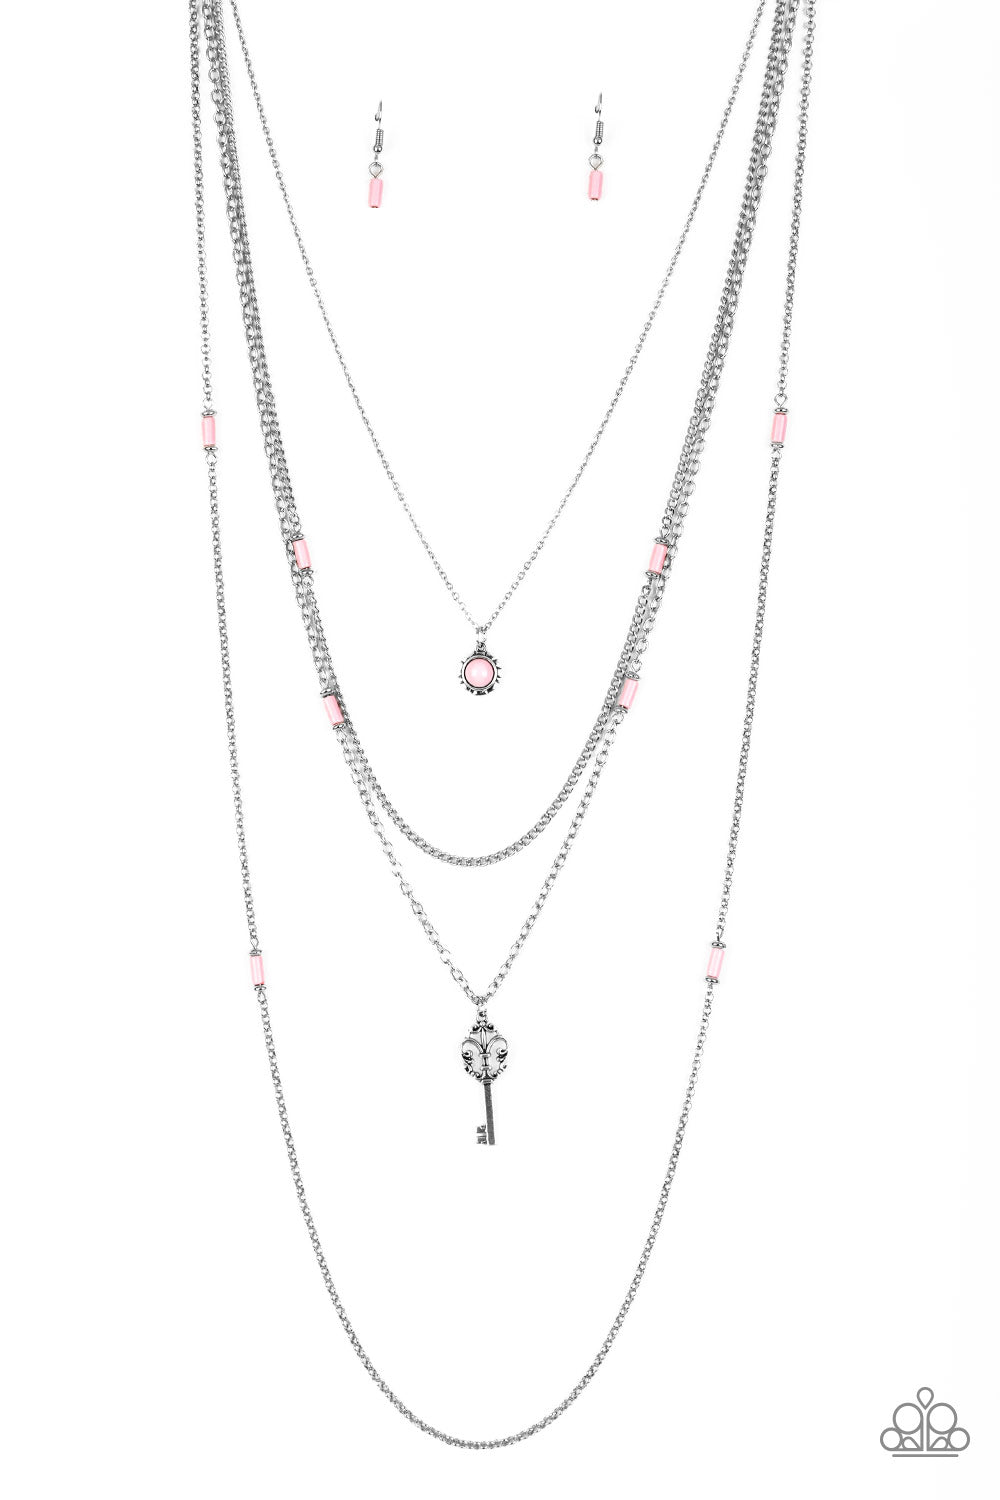 Key Keynote - Pink Necklace freeshipping - JewLz4u Gemstone Gallery